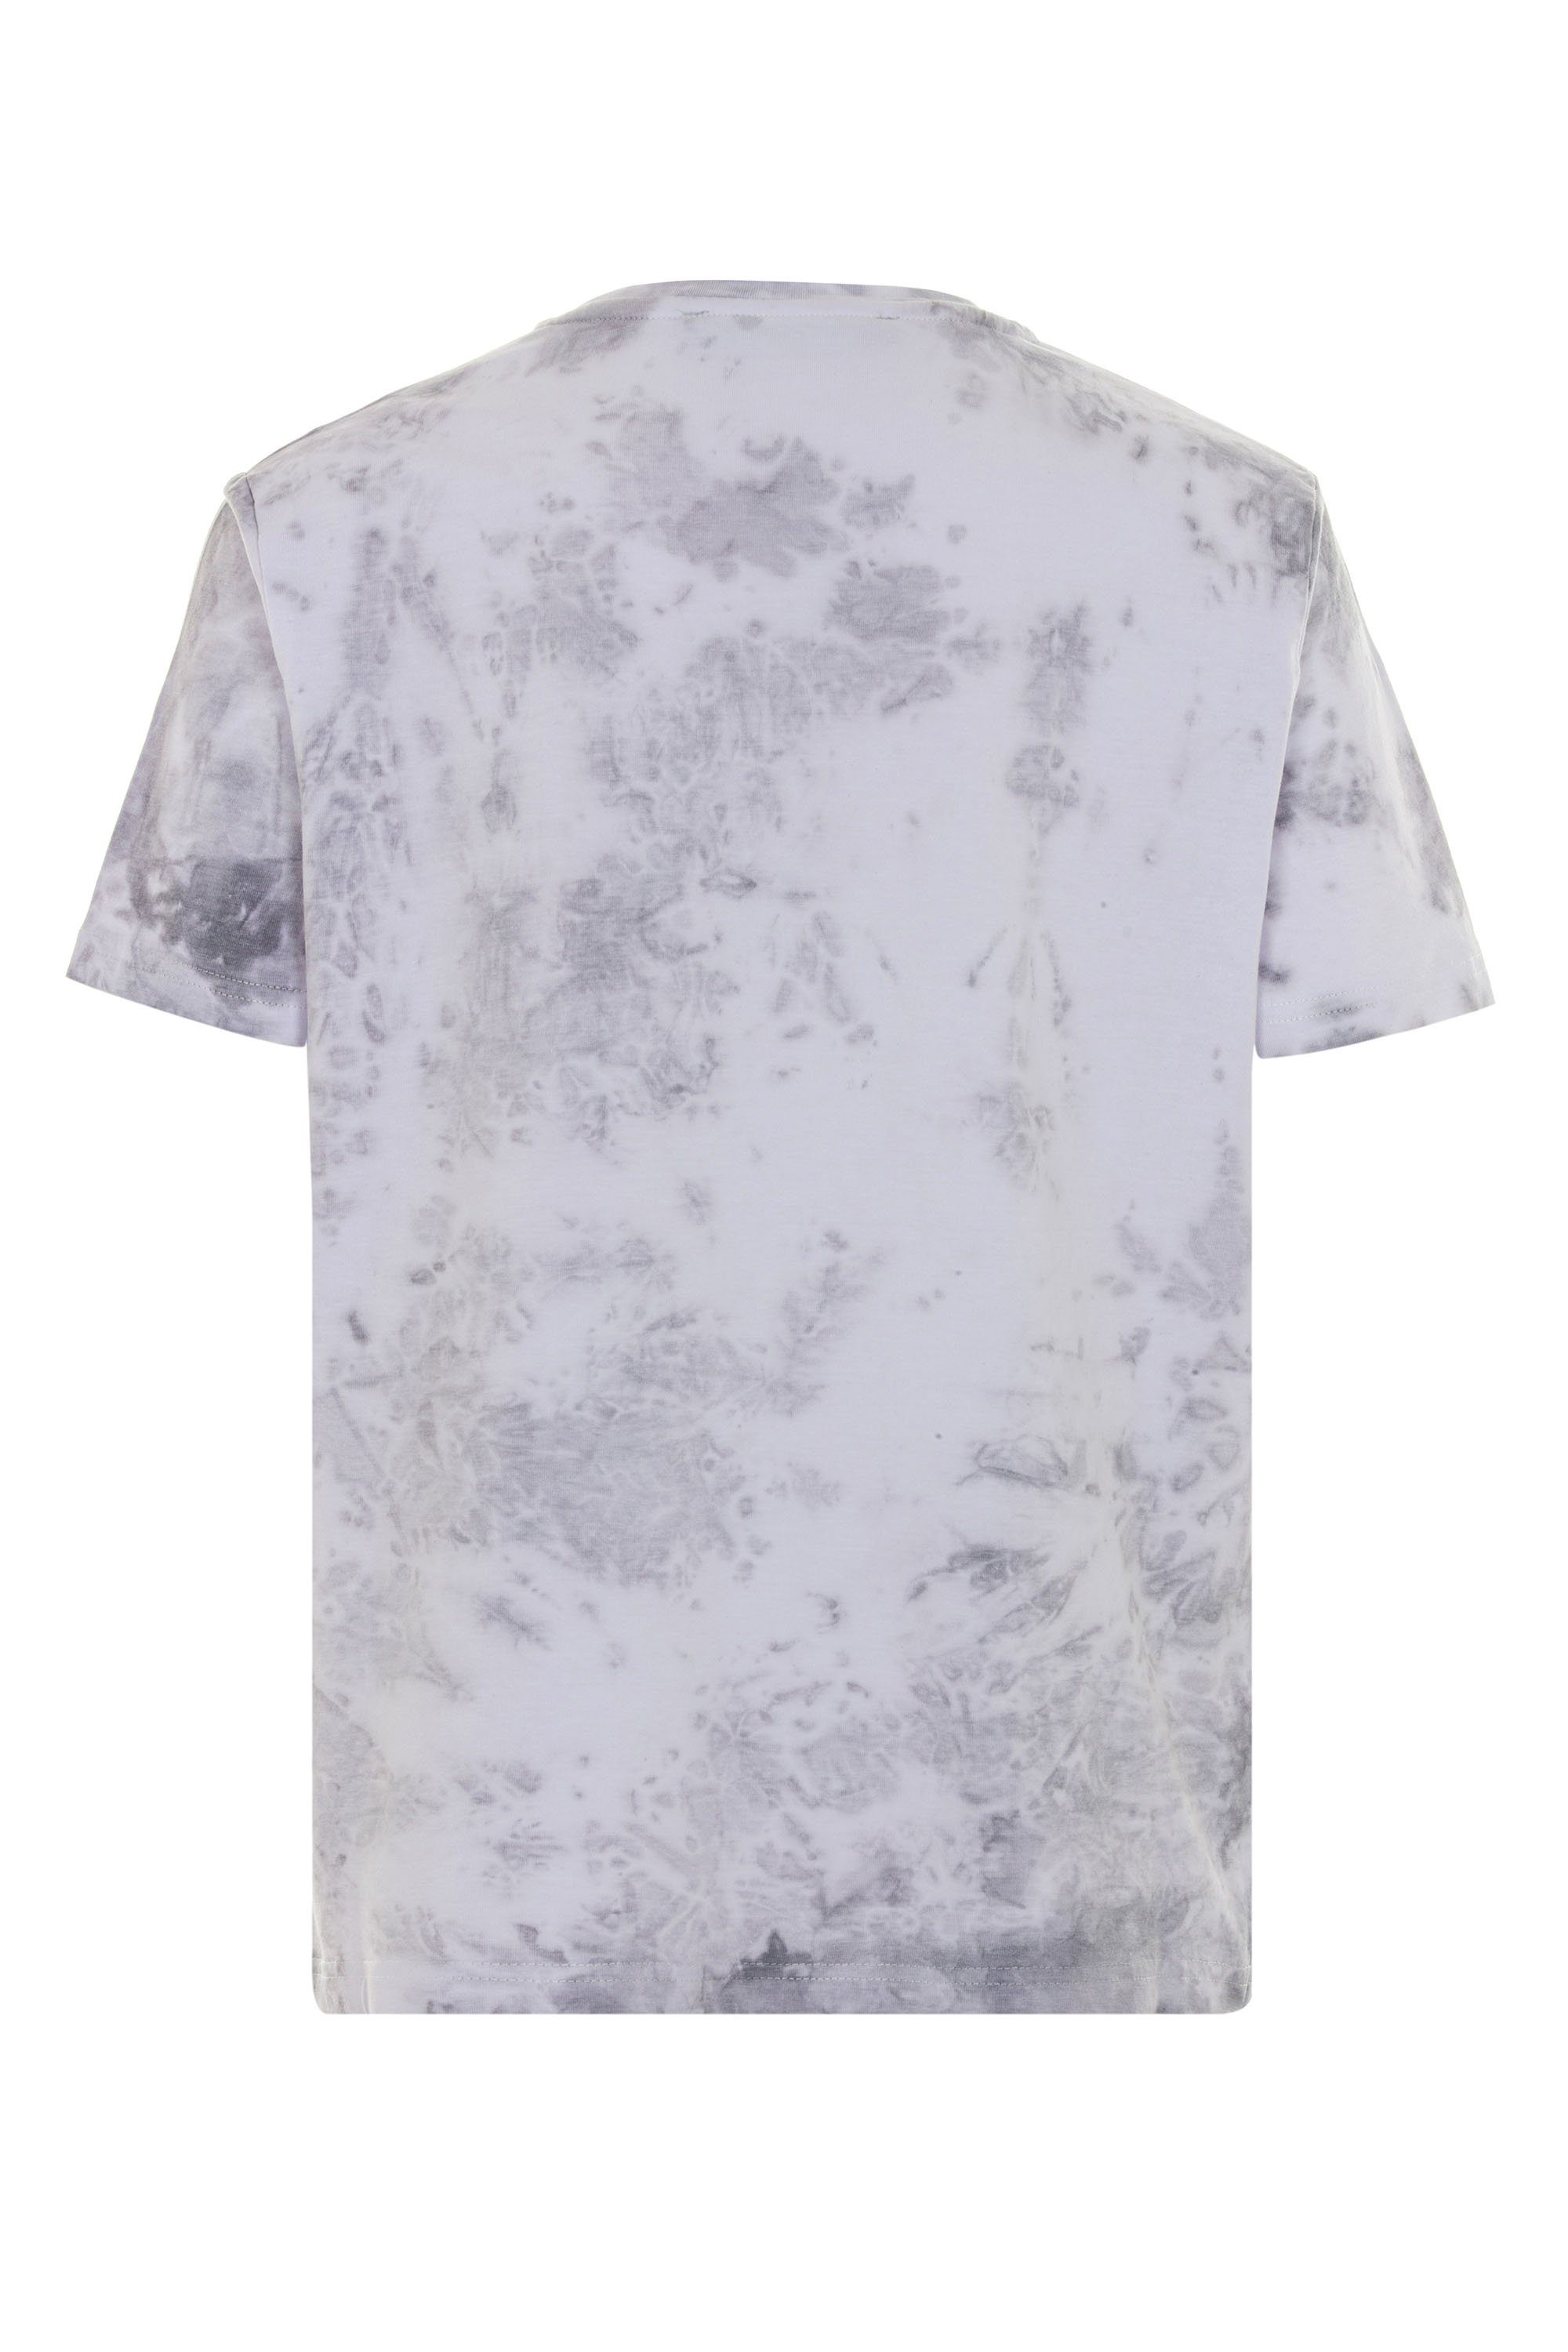 Baxx & grau mit coolem Motorrad-Print T-Shirt Cipo